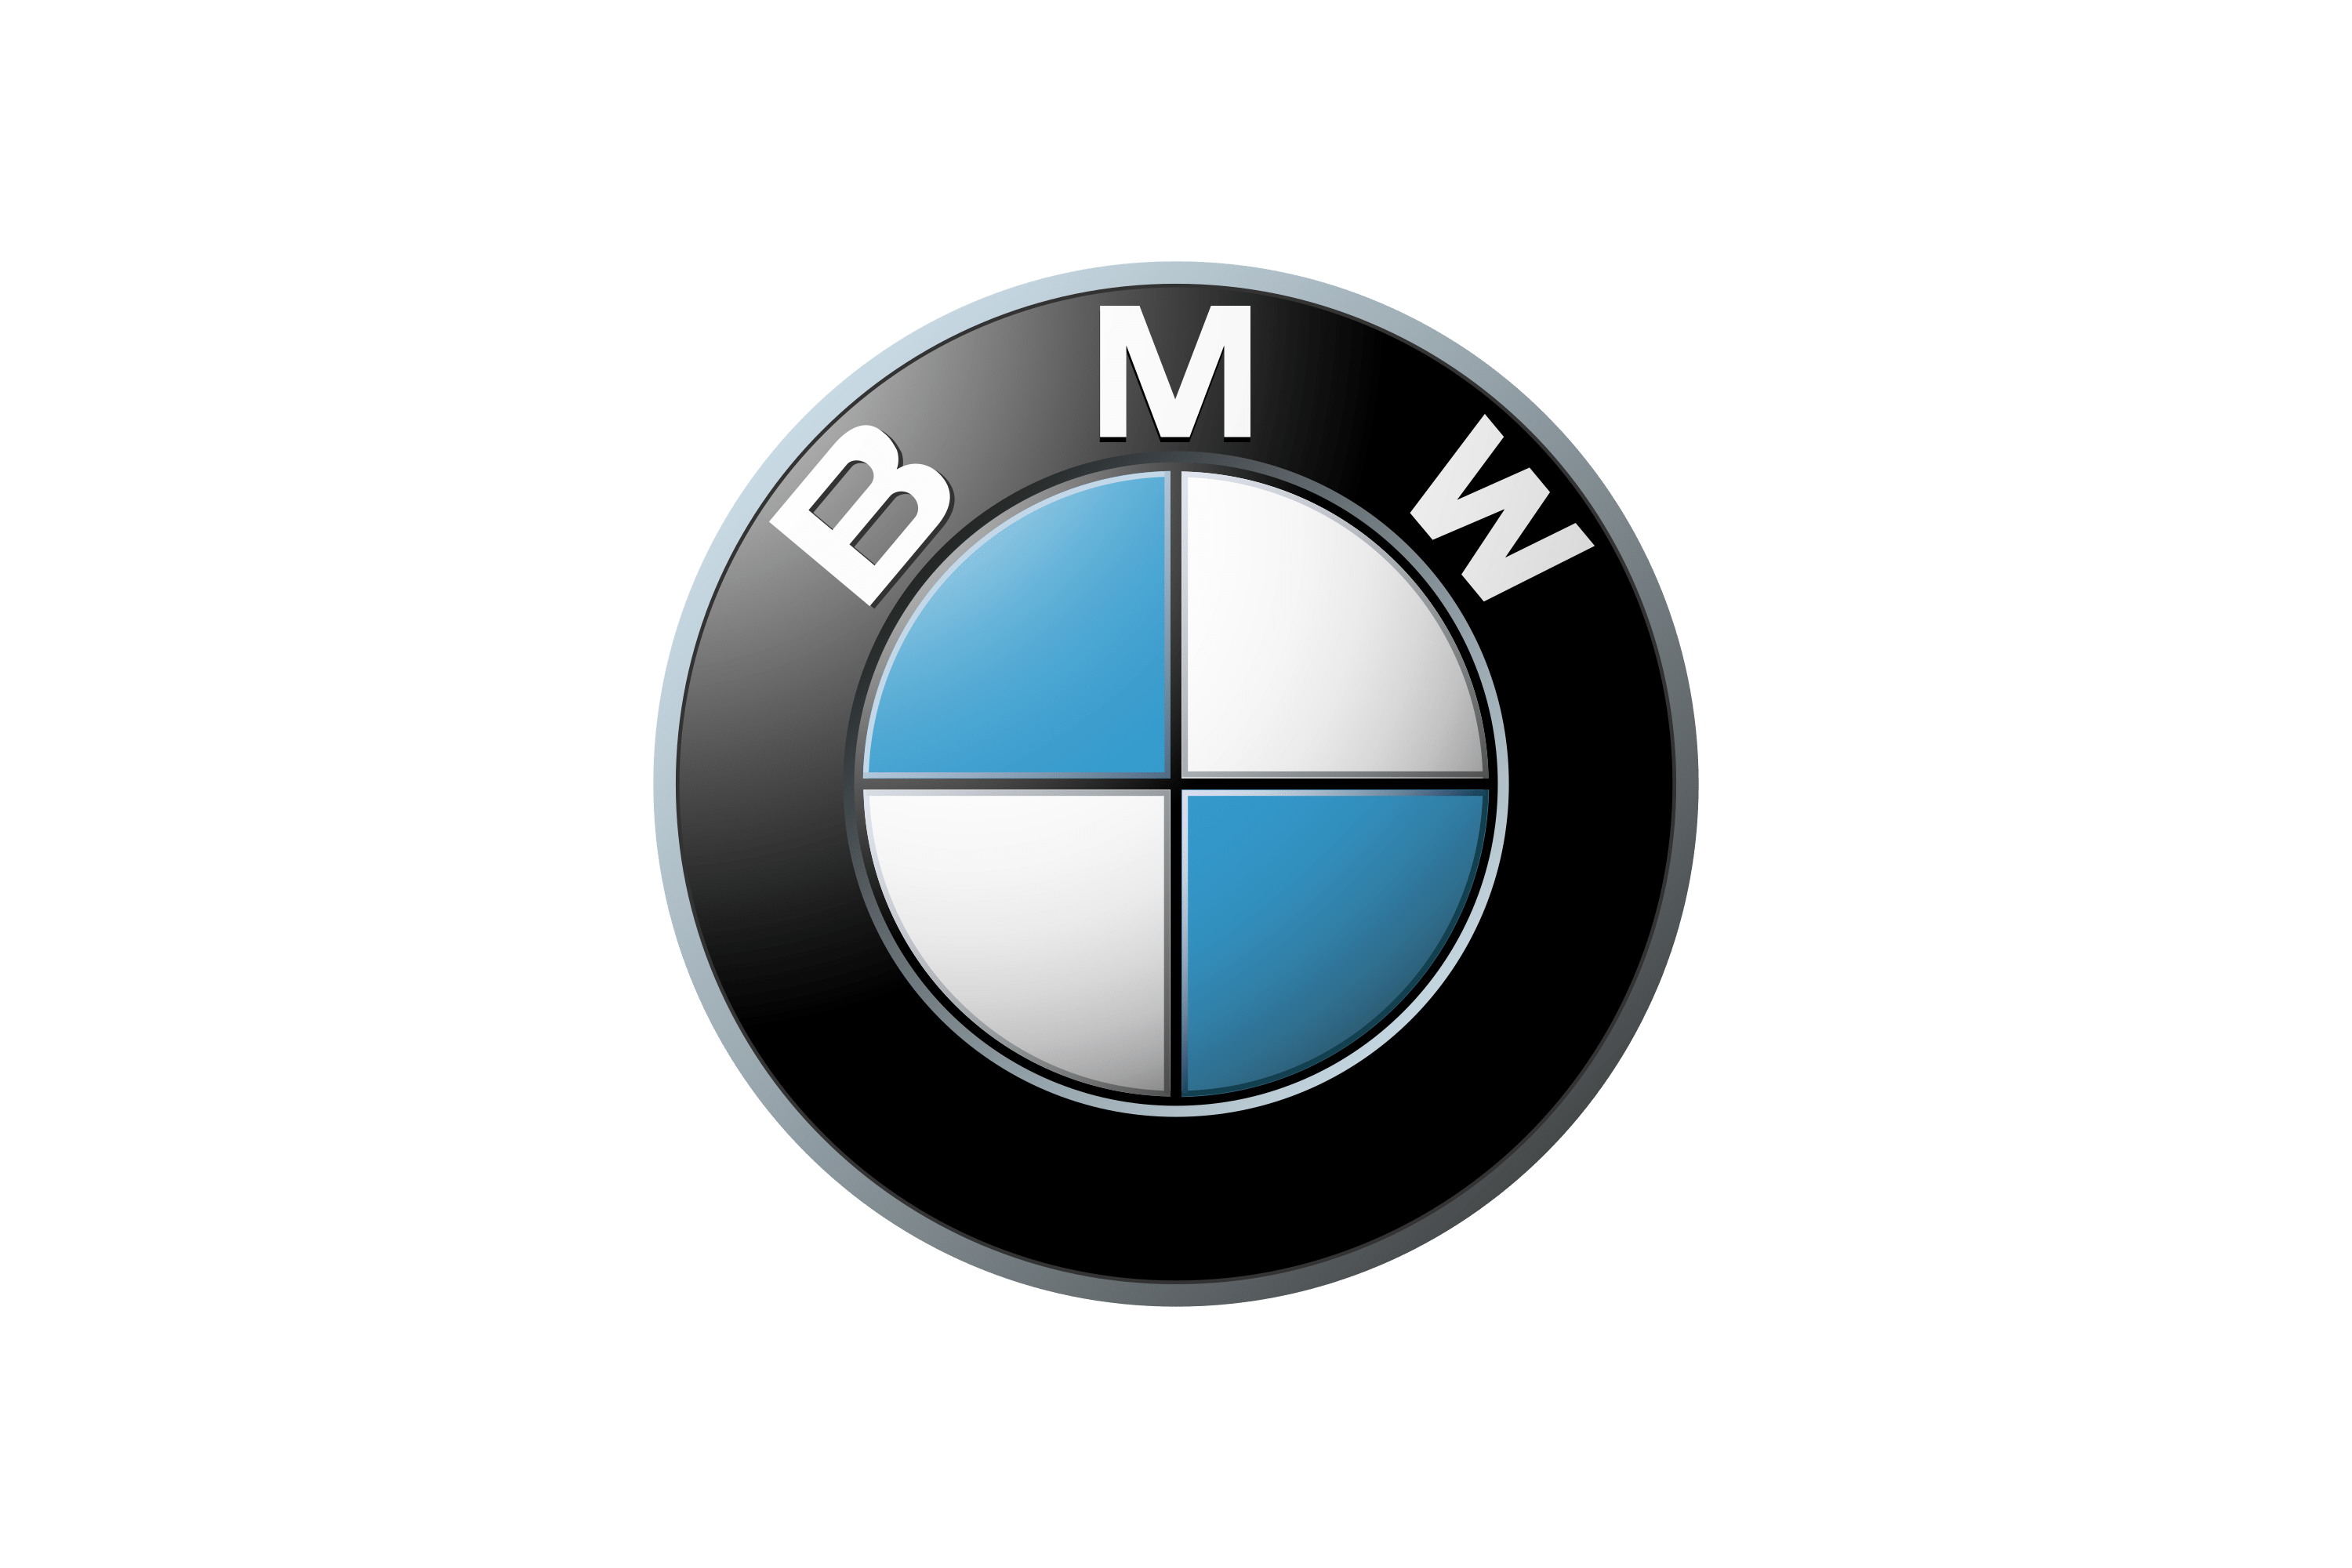 Download BMW (Bayerische Motoren Werke AG) Logo in SVG Vector or PNG File  Format 